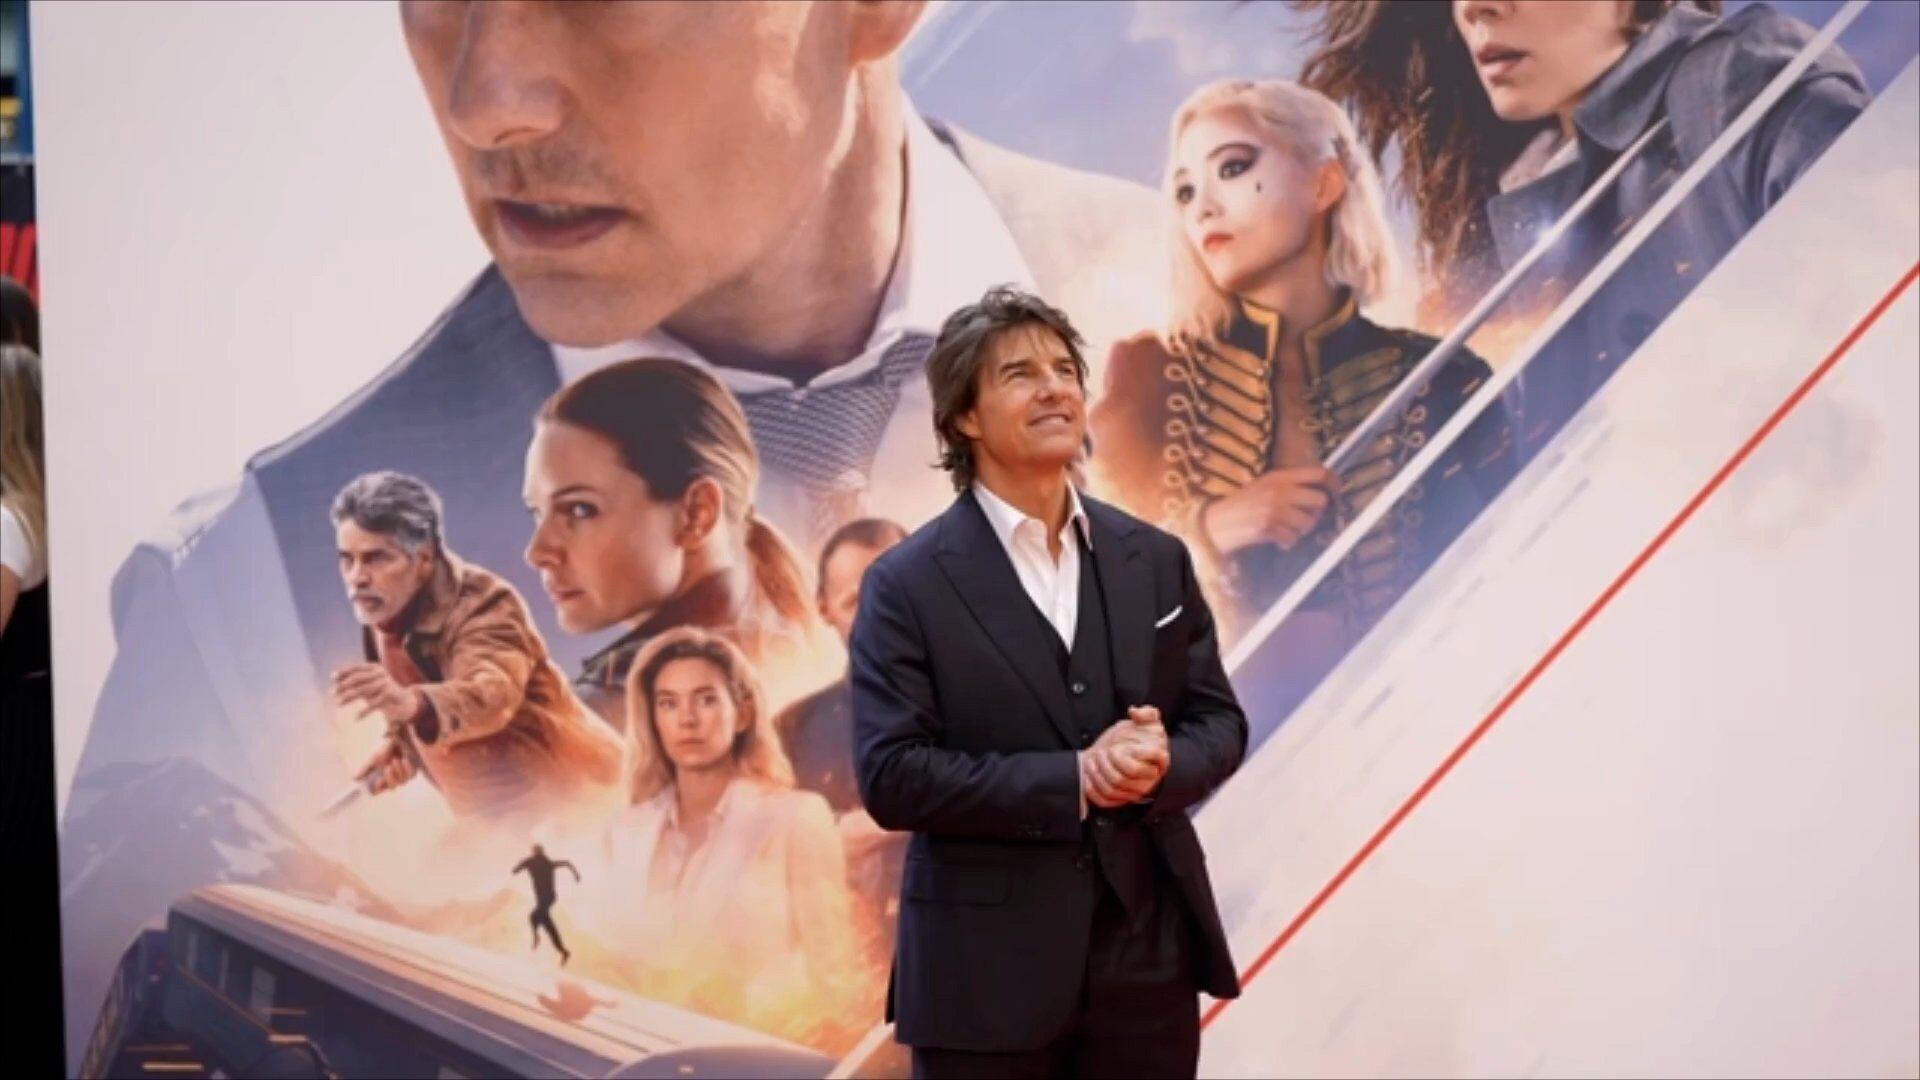 Column: Tom Cruise, 'Top Gun: Maverick' industry superhero? - Los